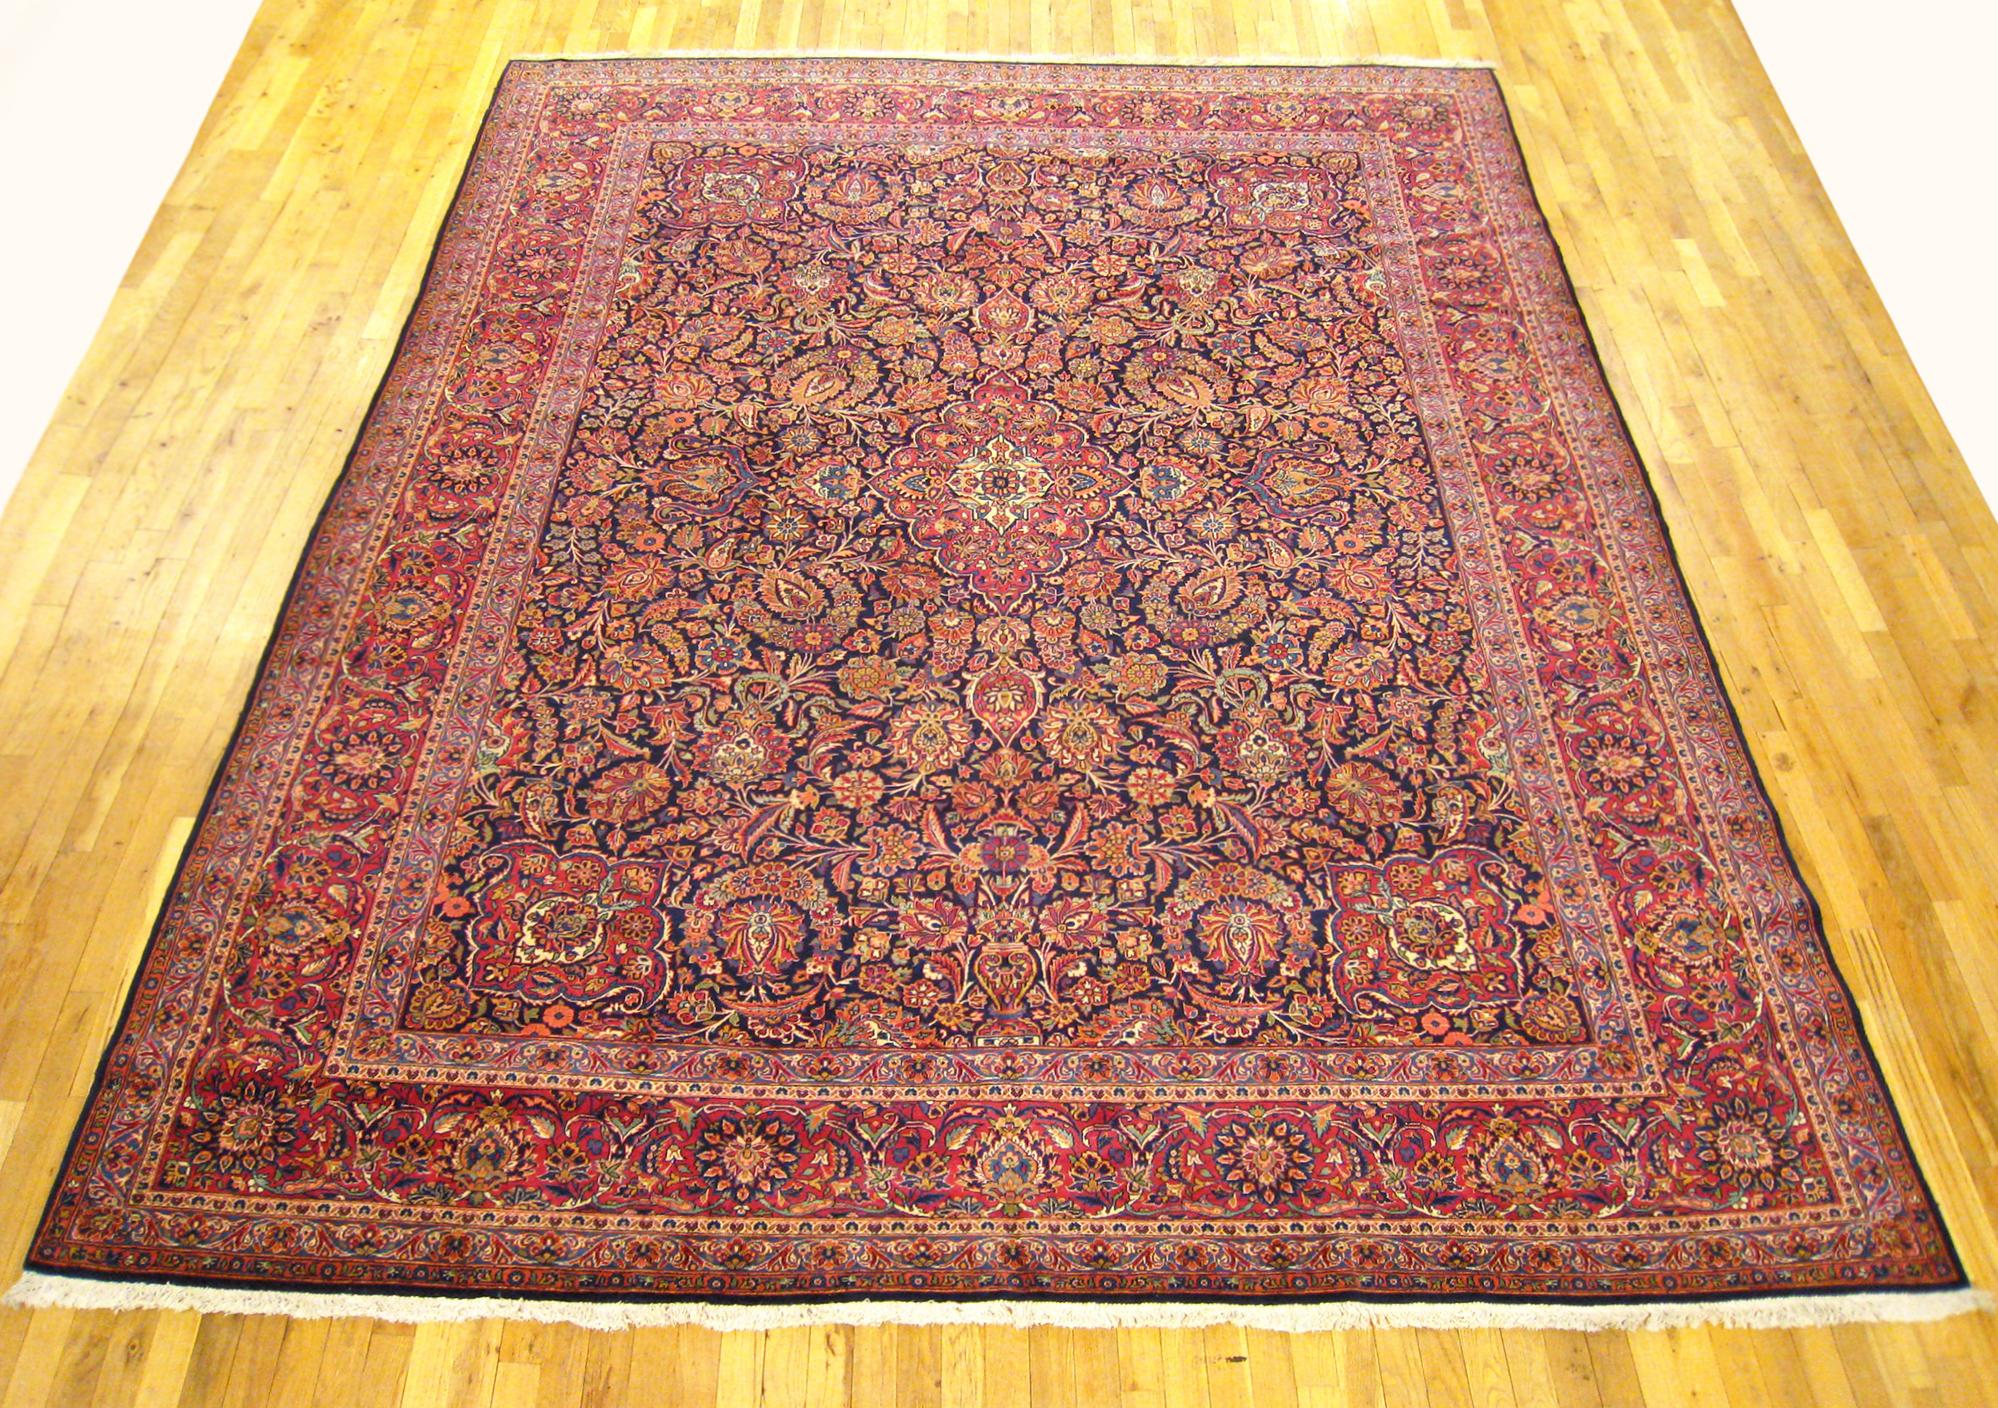 Antique Persian Kashan Dabir oriental carpet, in room size.

An extraordinary antique Persian Kashan Dabir carpet, circa 1910, size 11' 7